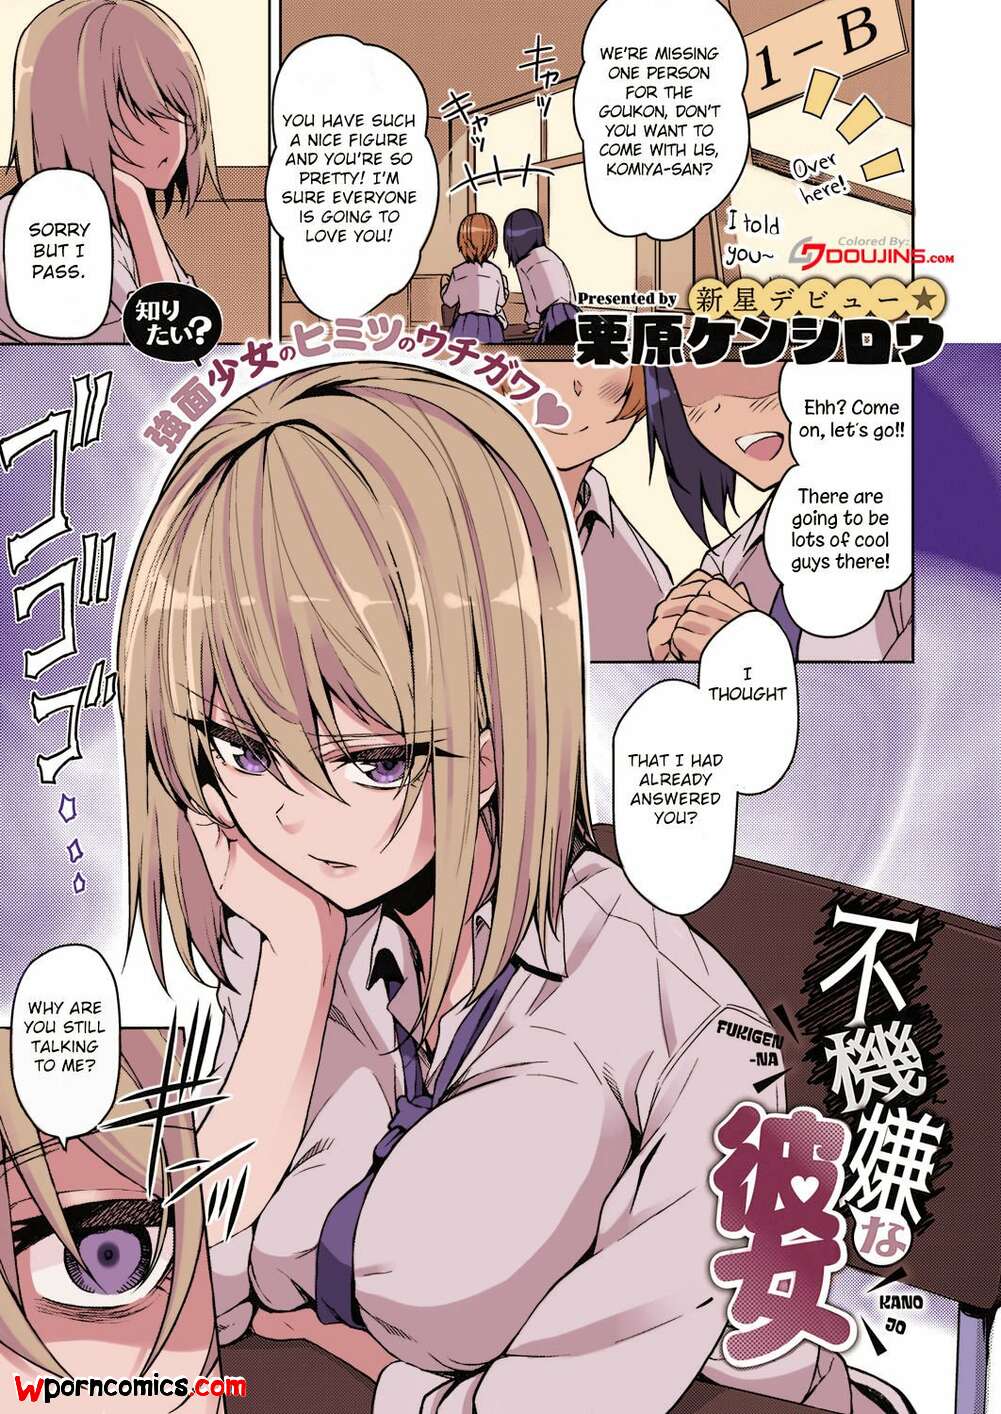 Manga porn comic